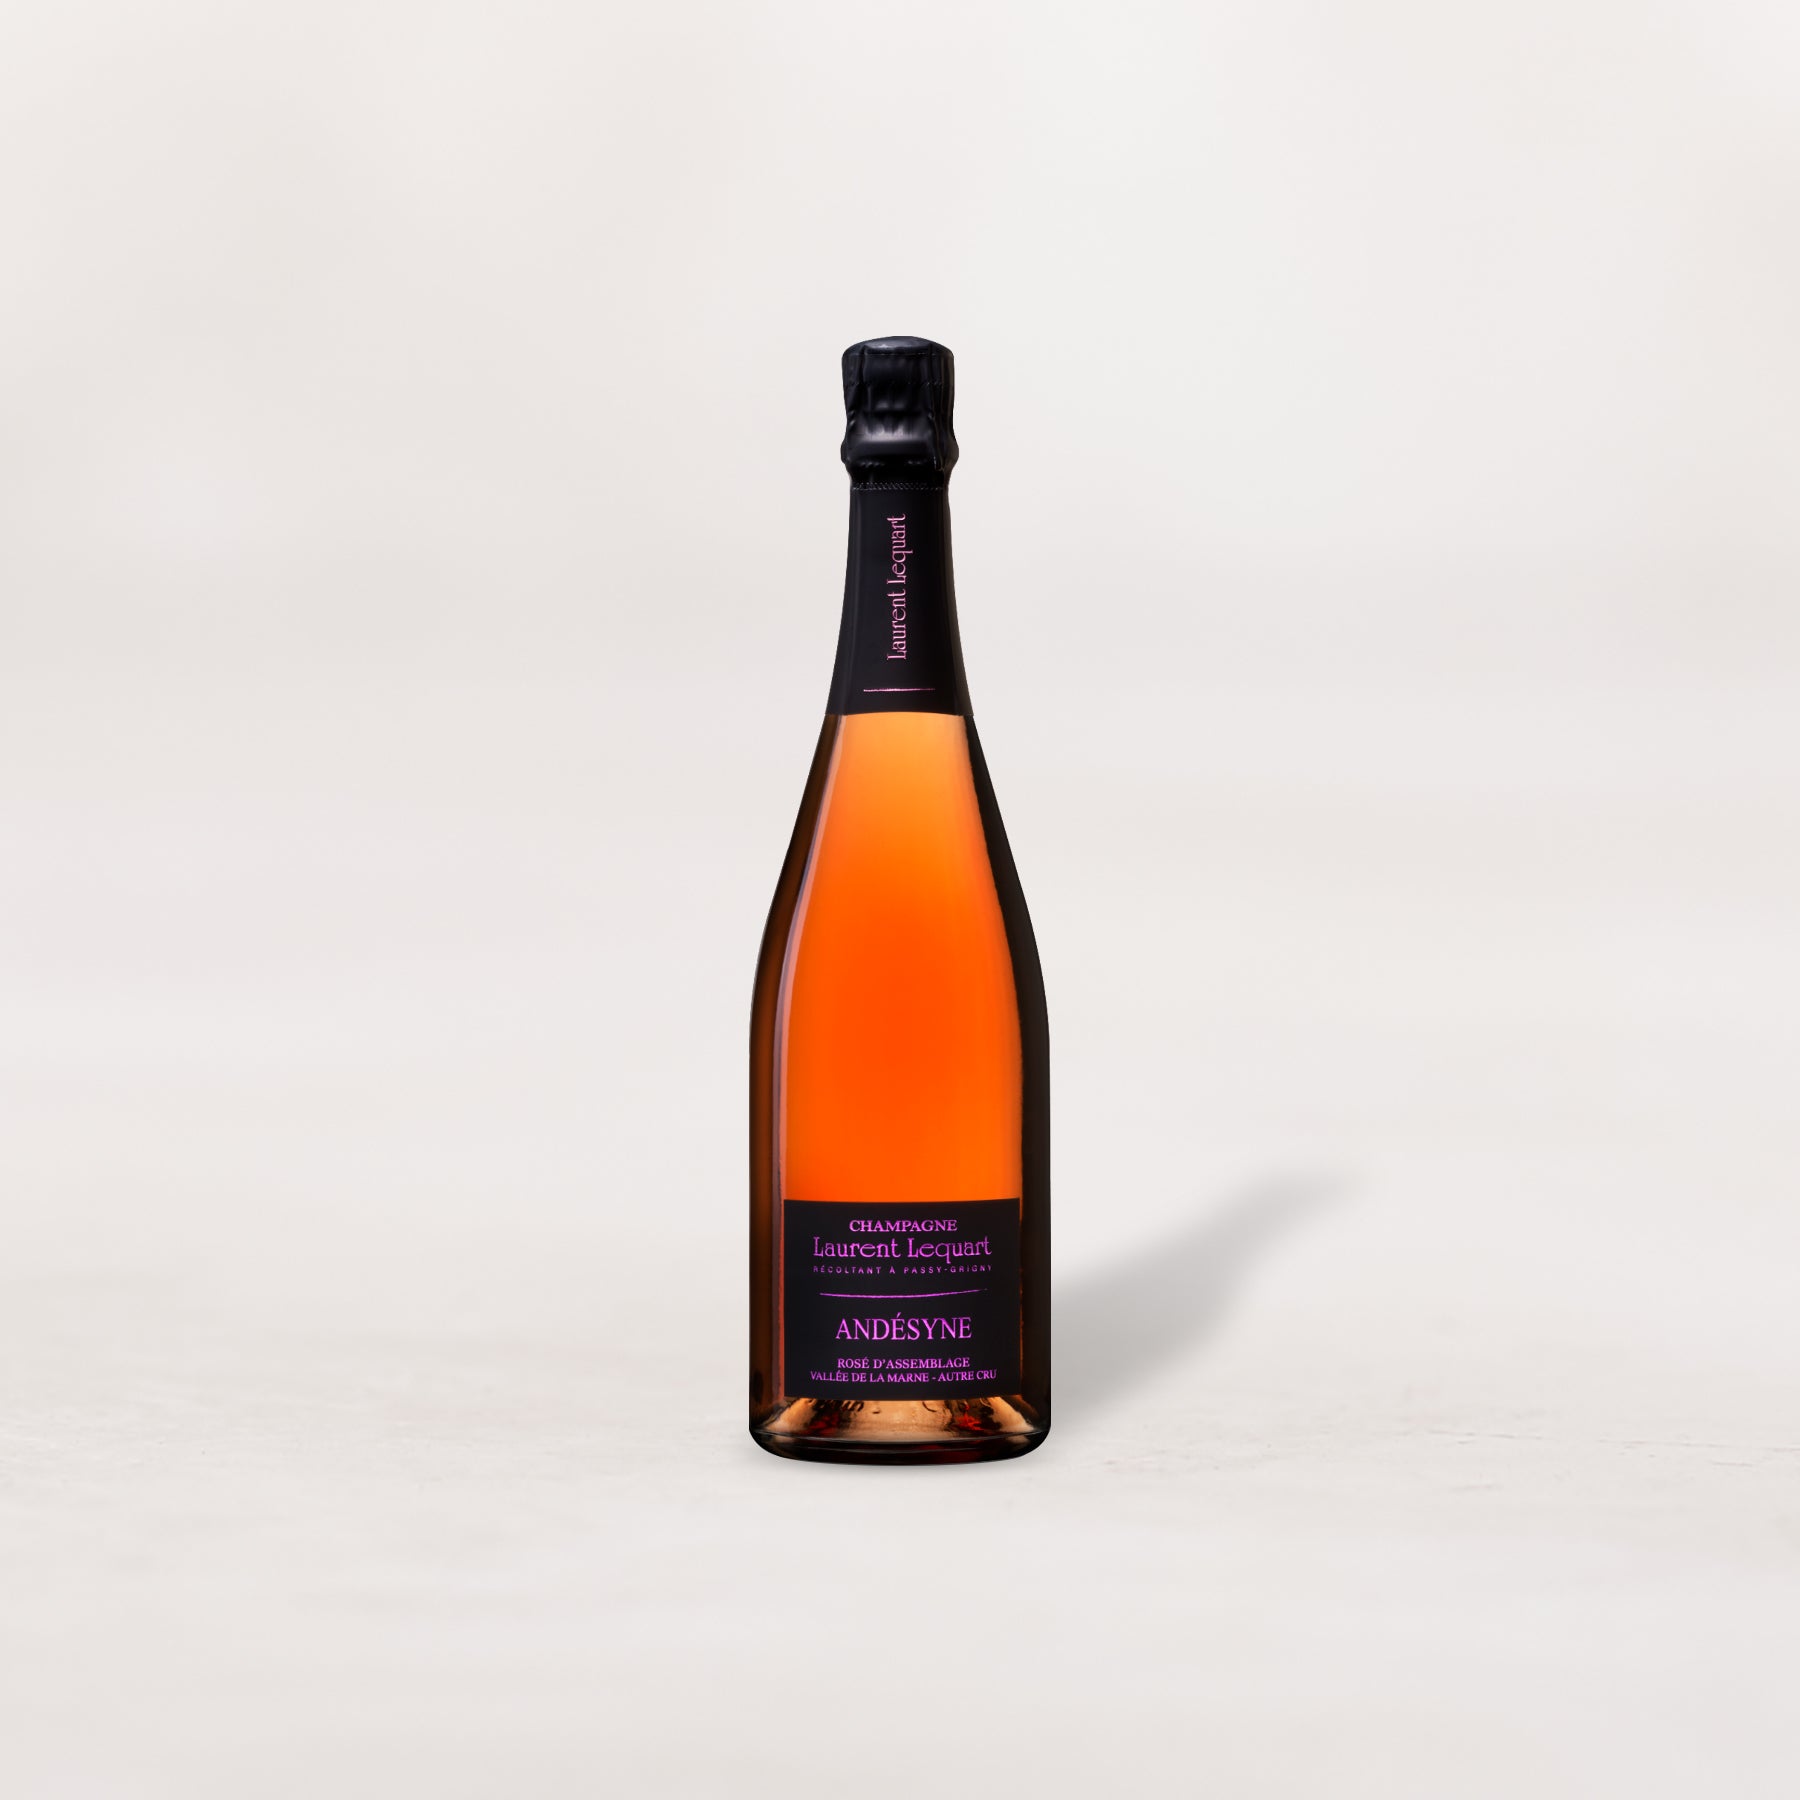 MV Laurent Lequart, Champagne Extra Brut Rosé "Blanche d'Andesyne"